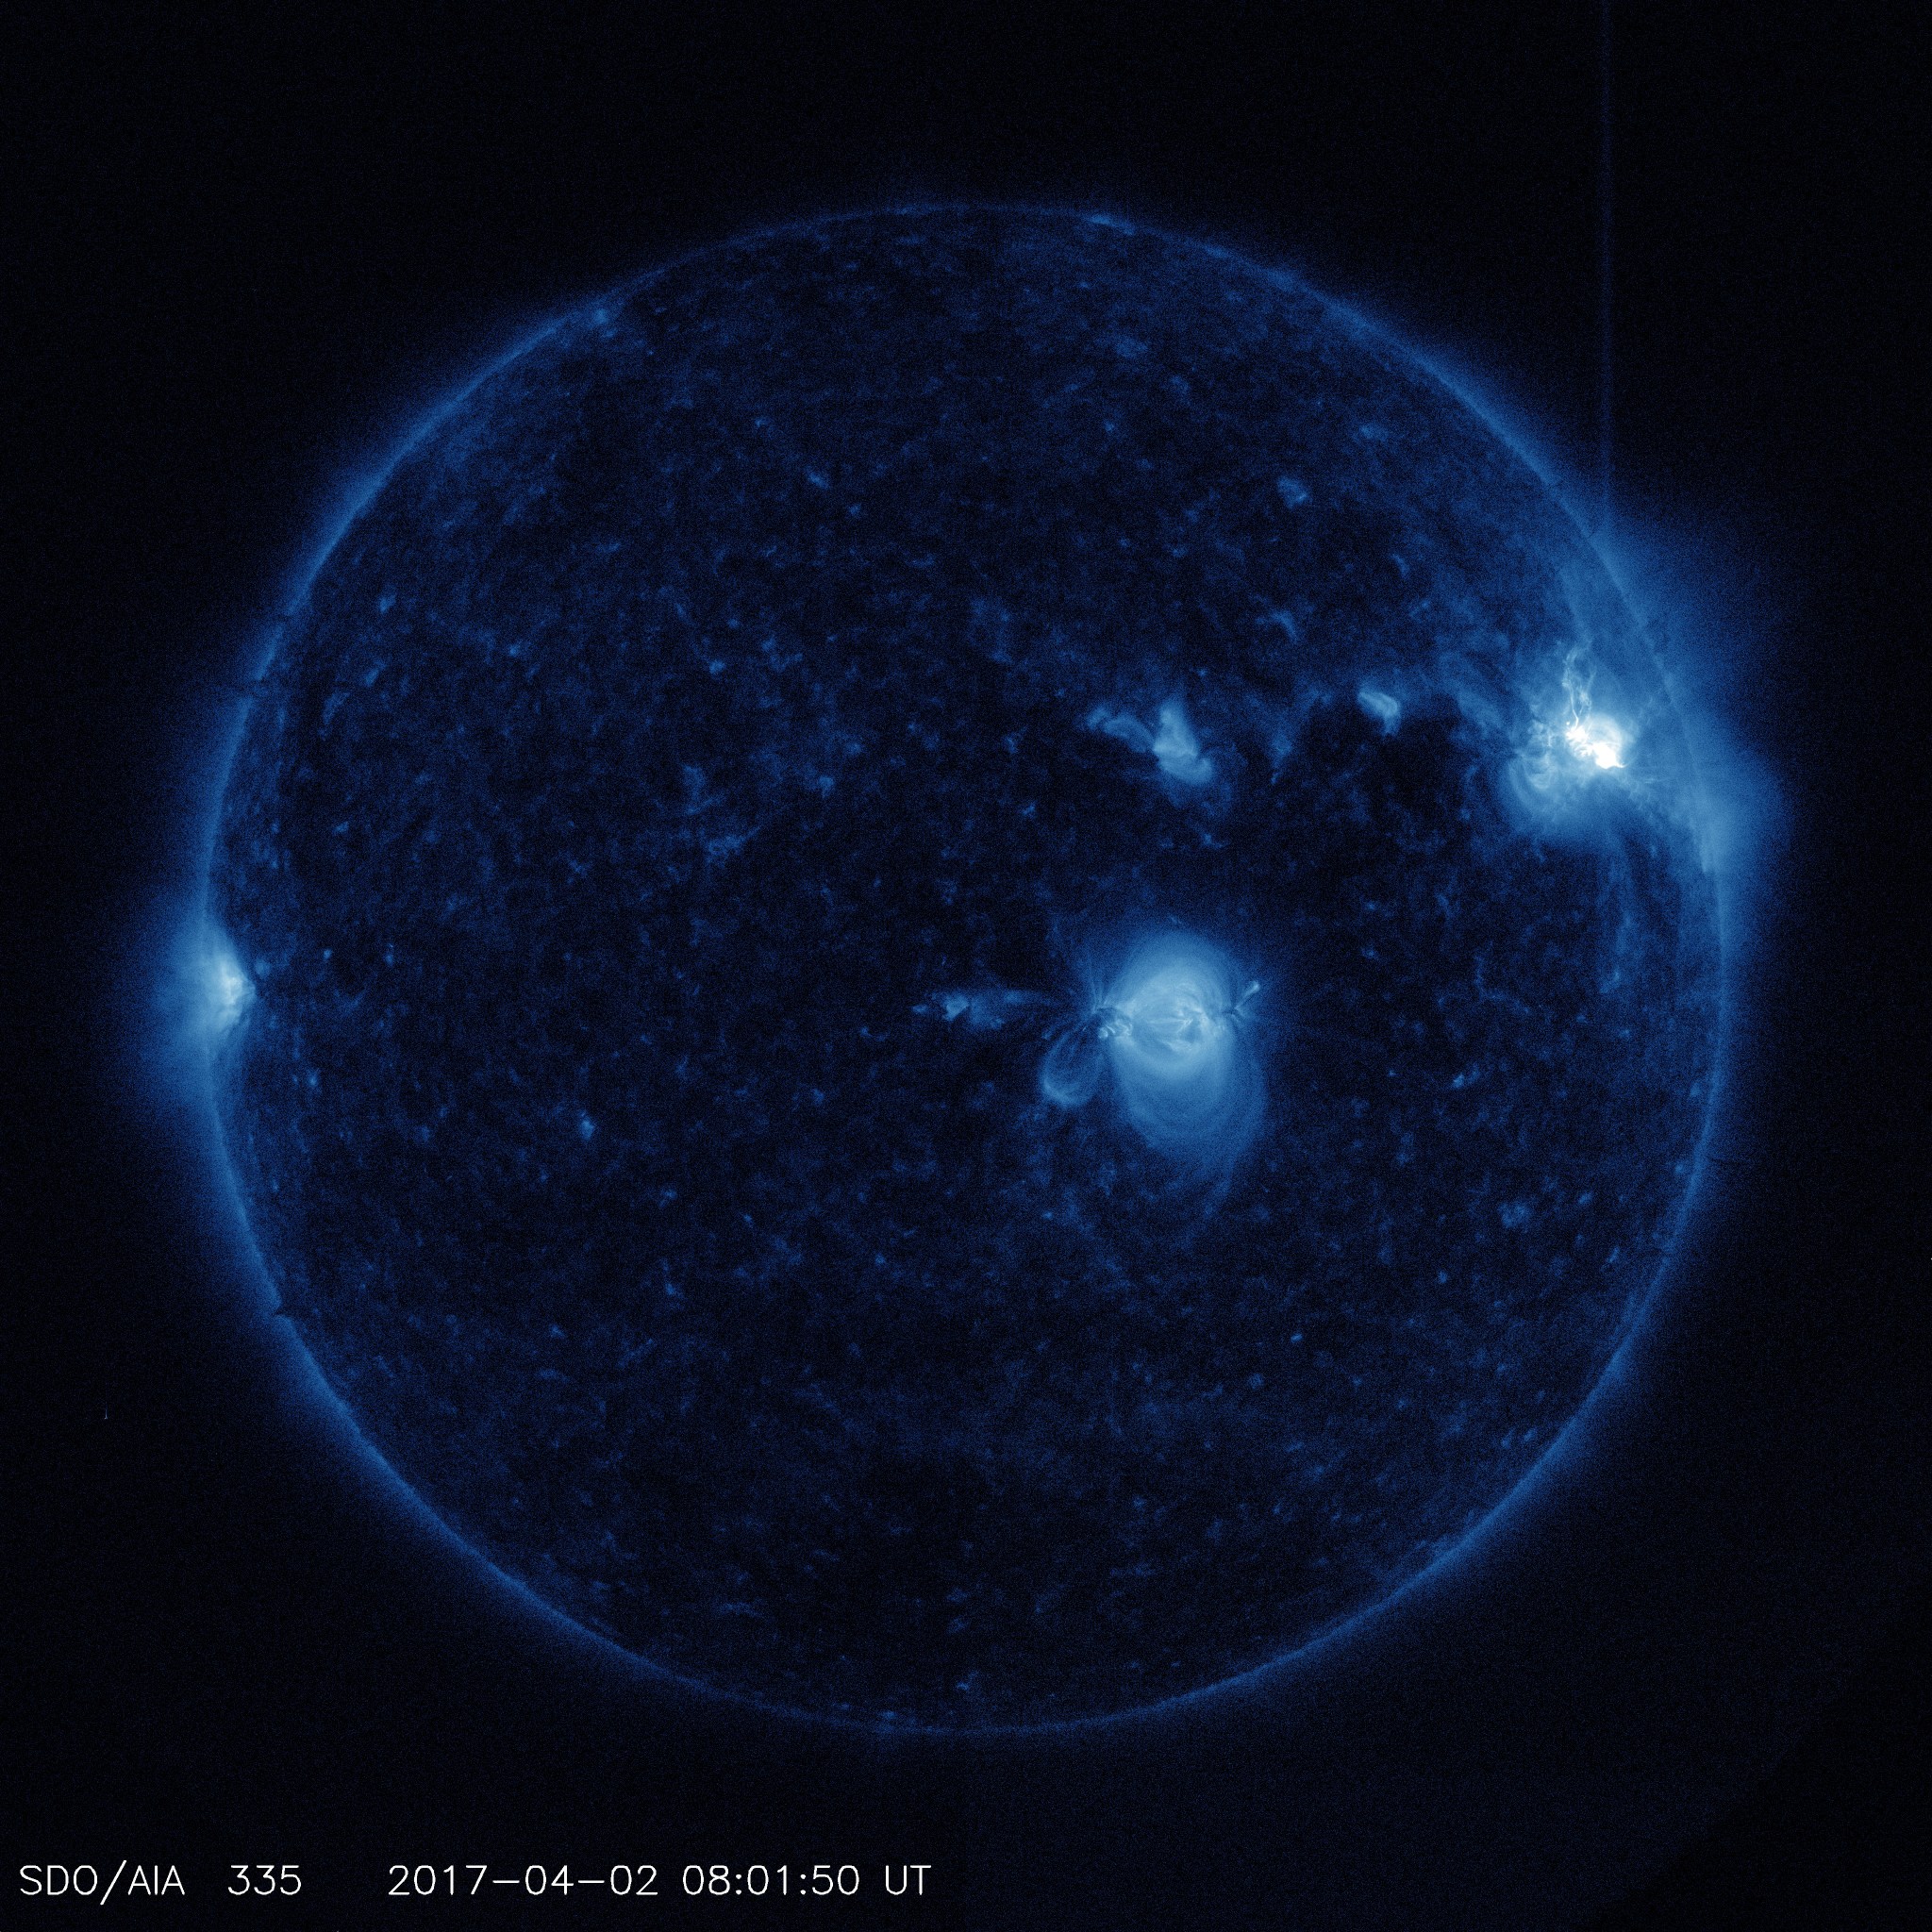 SDO solar flare image from April 2, 2017